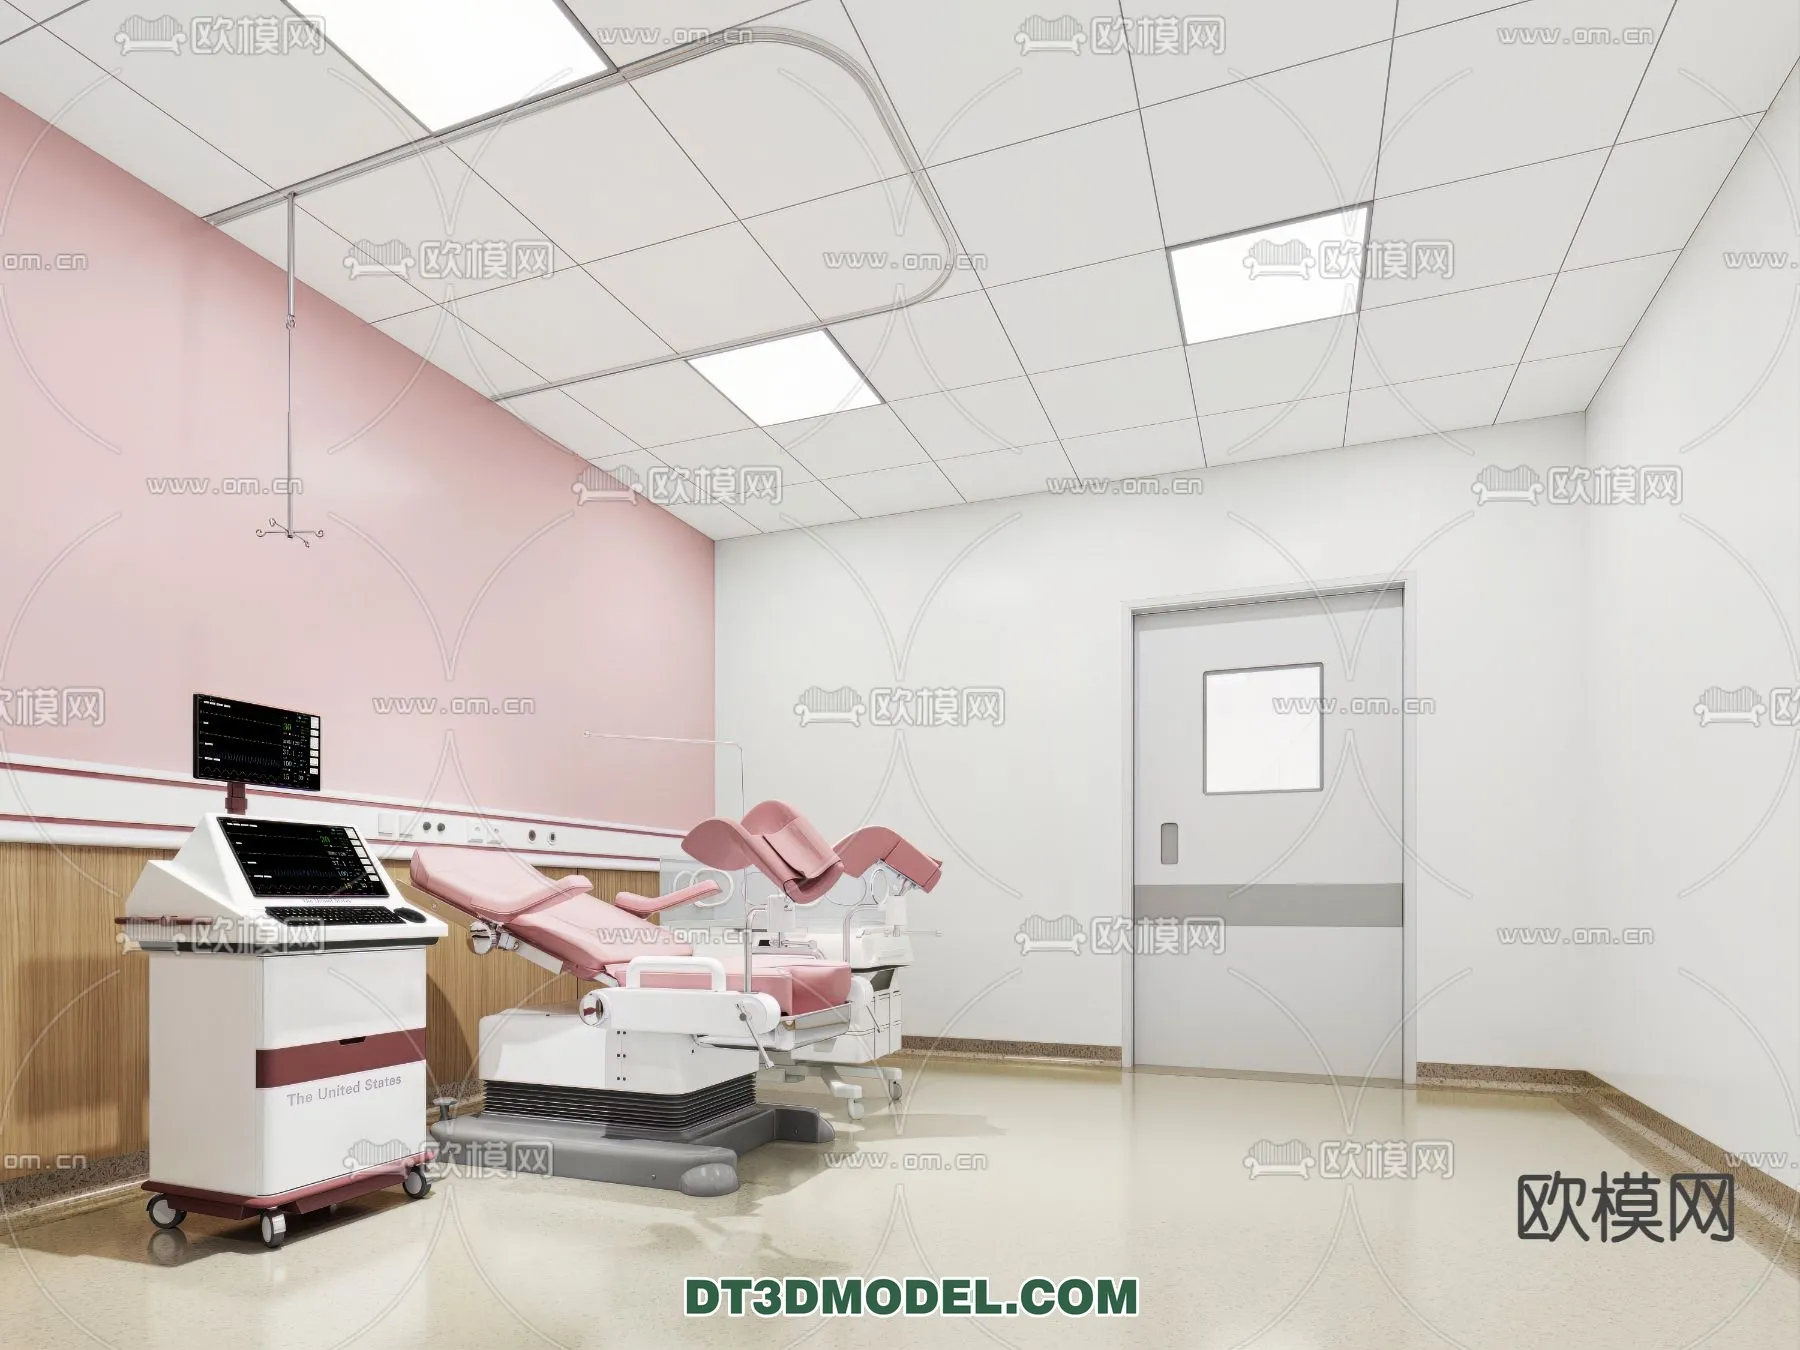 HOSPITAL 3D SCENES – MODERN – 0140